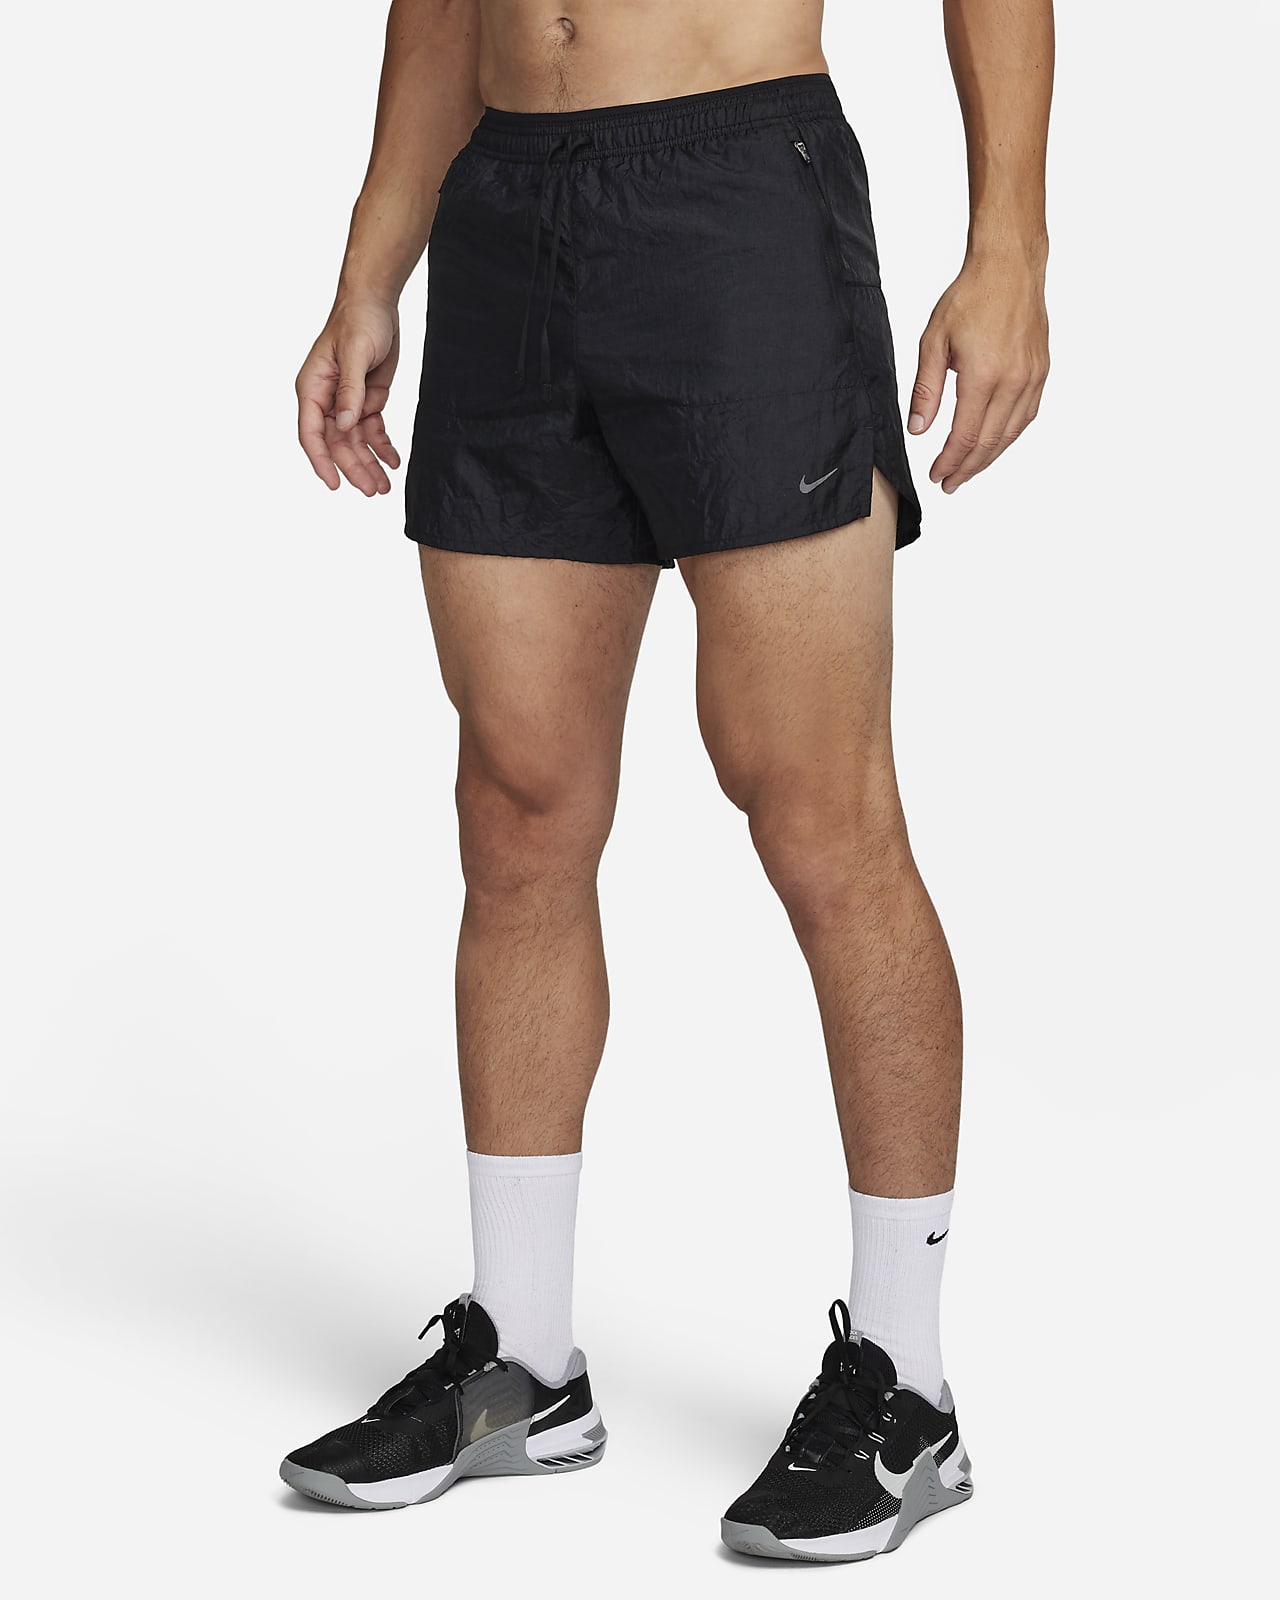 Nike Training Dri-FIT 5inch shorts in black